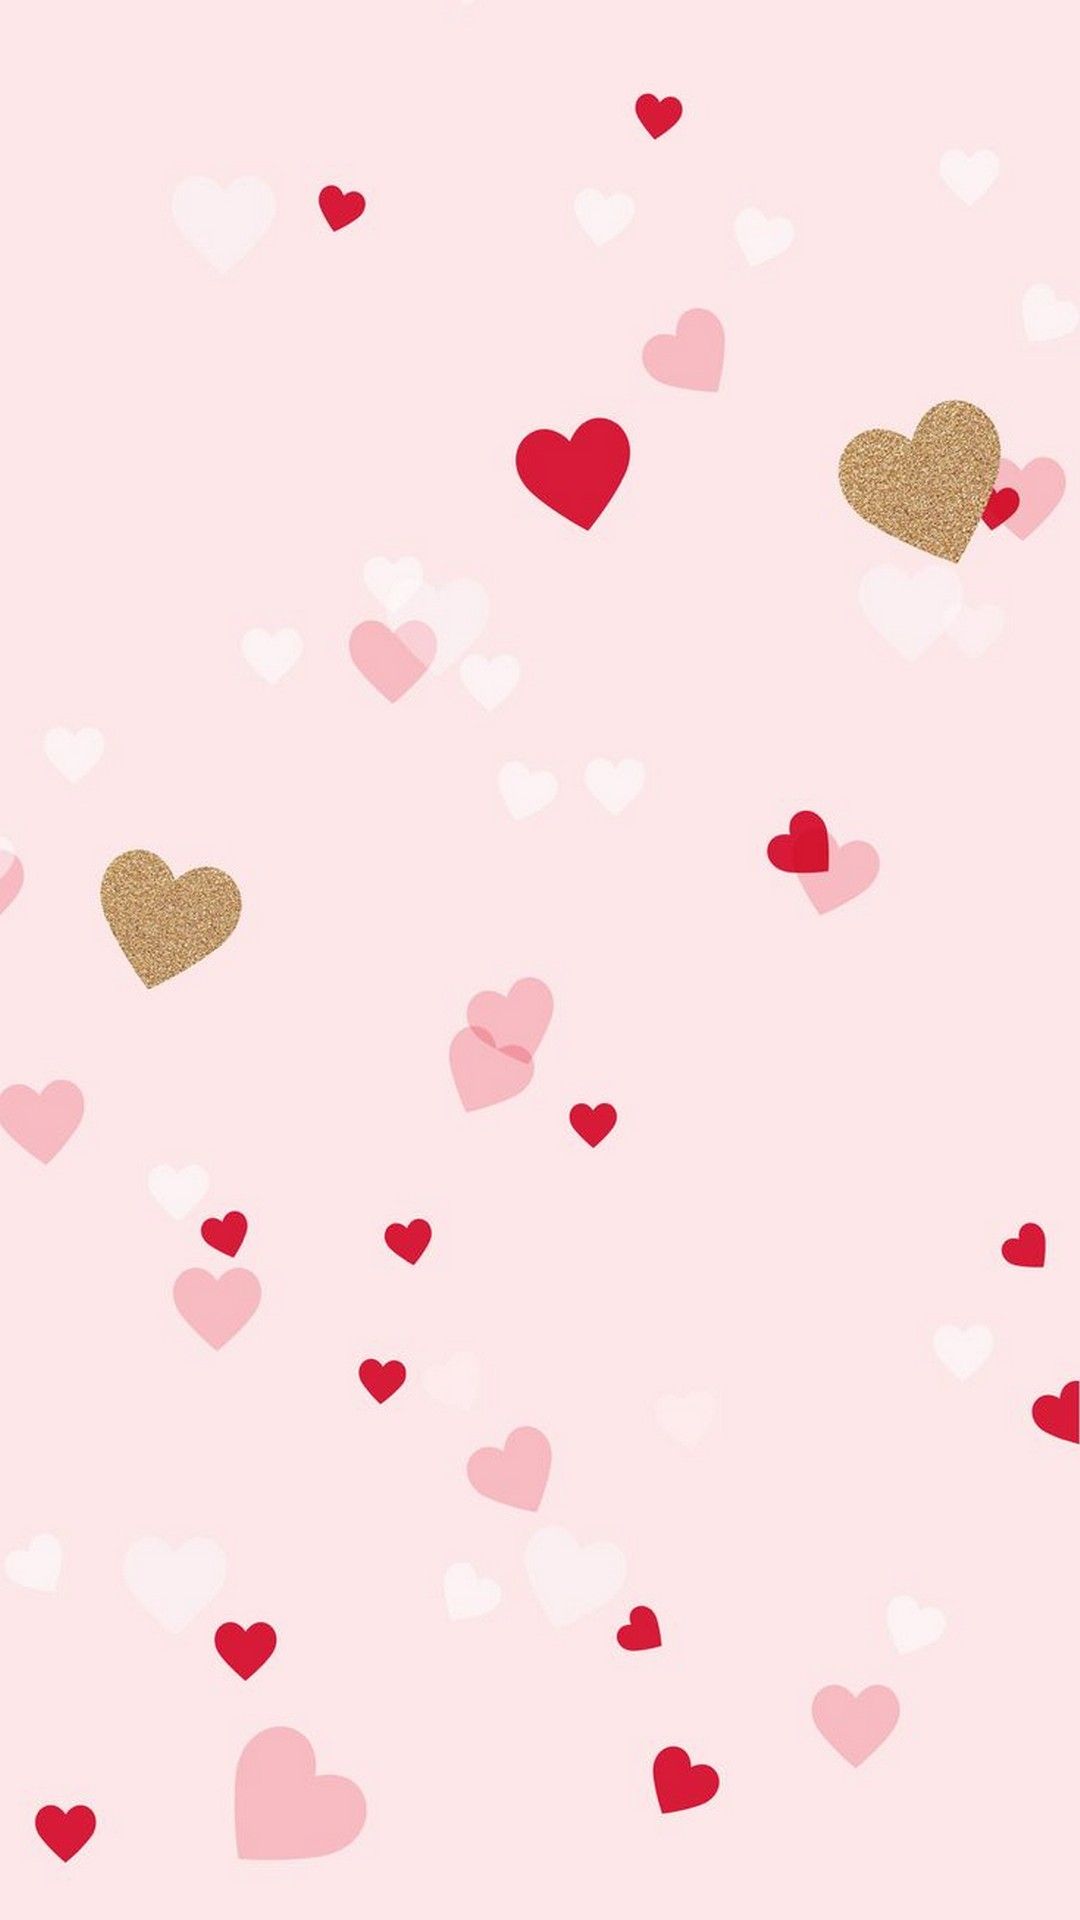 Valentine Wallpaper For iPhone iPhonewallpaper